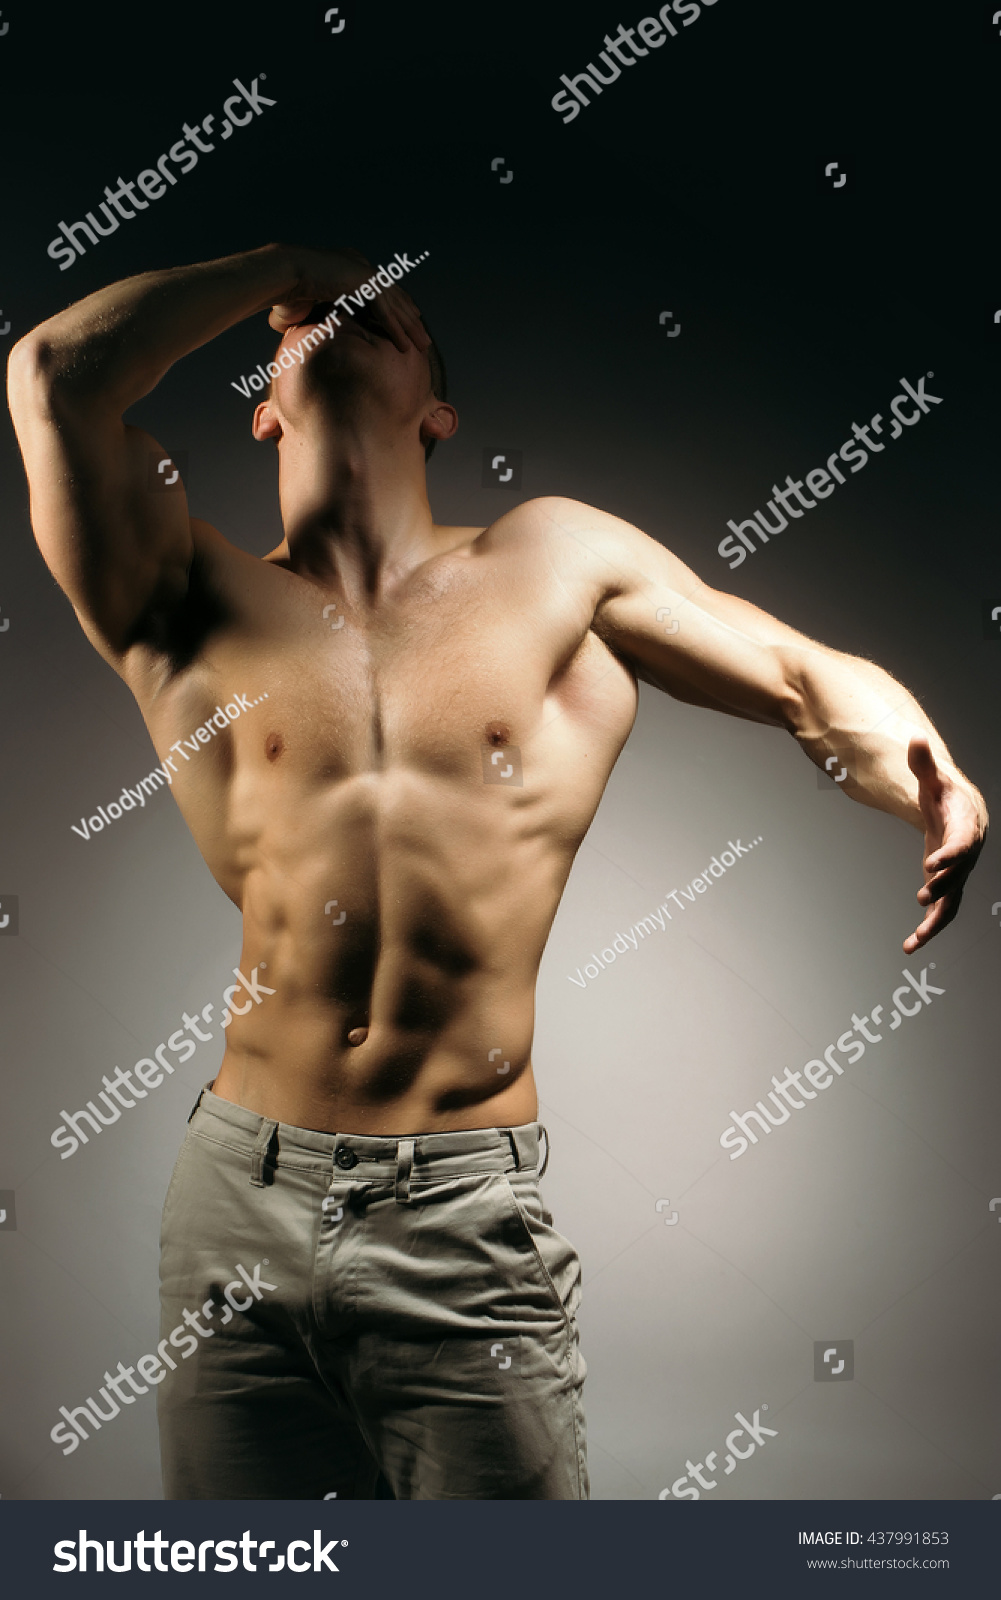 Sexy Muscular Male Torso Athlete Bodybuilder Stock Photo Shutterstock